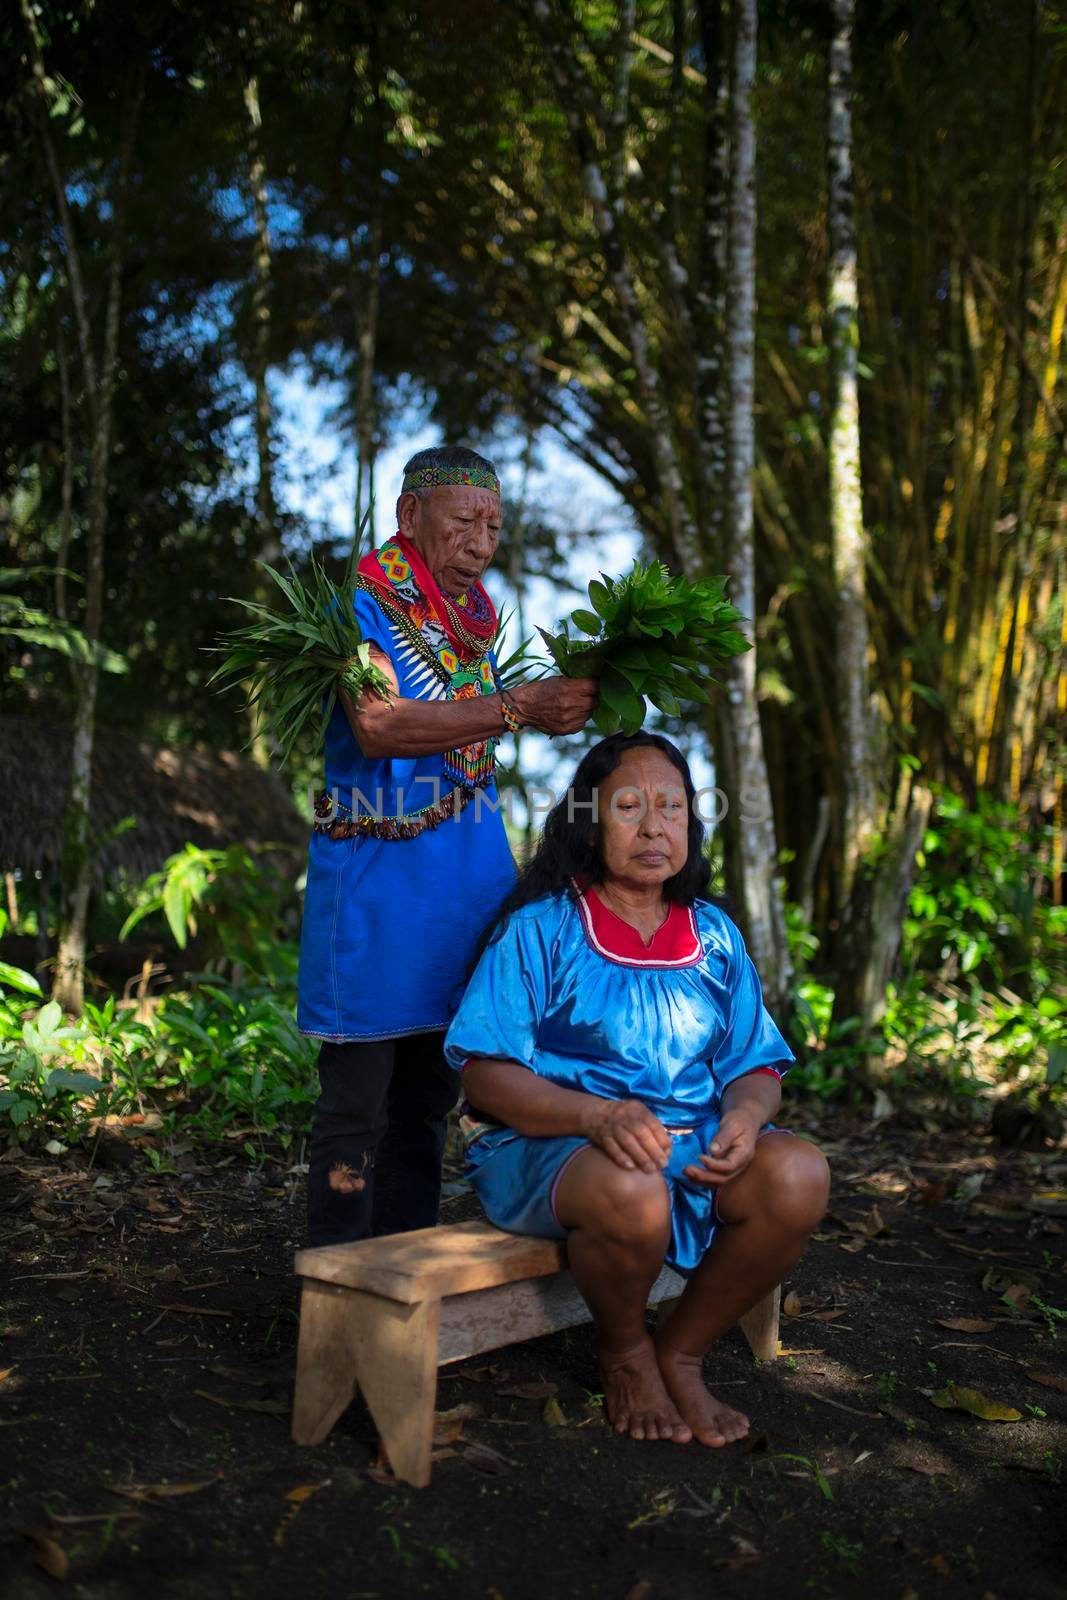 Nueva Loja, Sucumbios / Ecuador - September 2 2020: Elderly indigenous shaman of Cofan nationality performing healing ritual to a Cofan woman in the Amazon rainforest